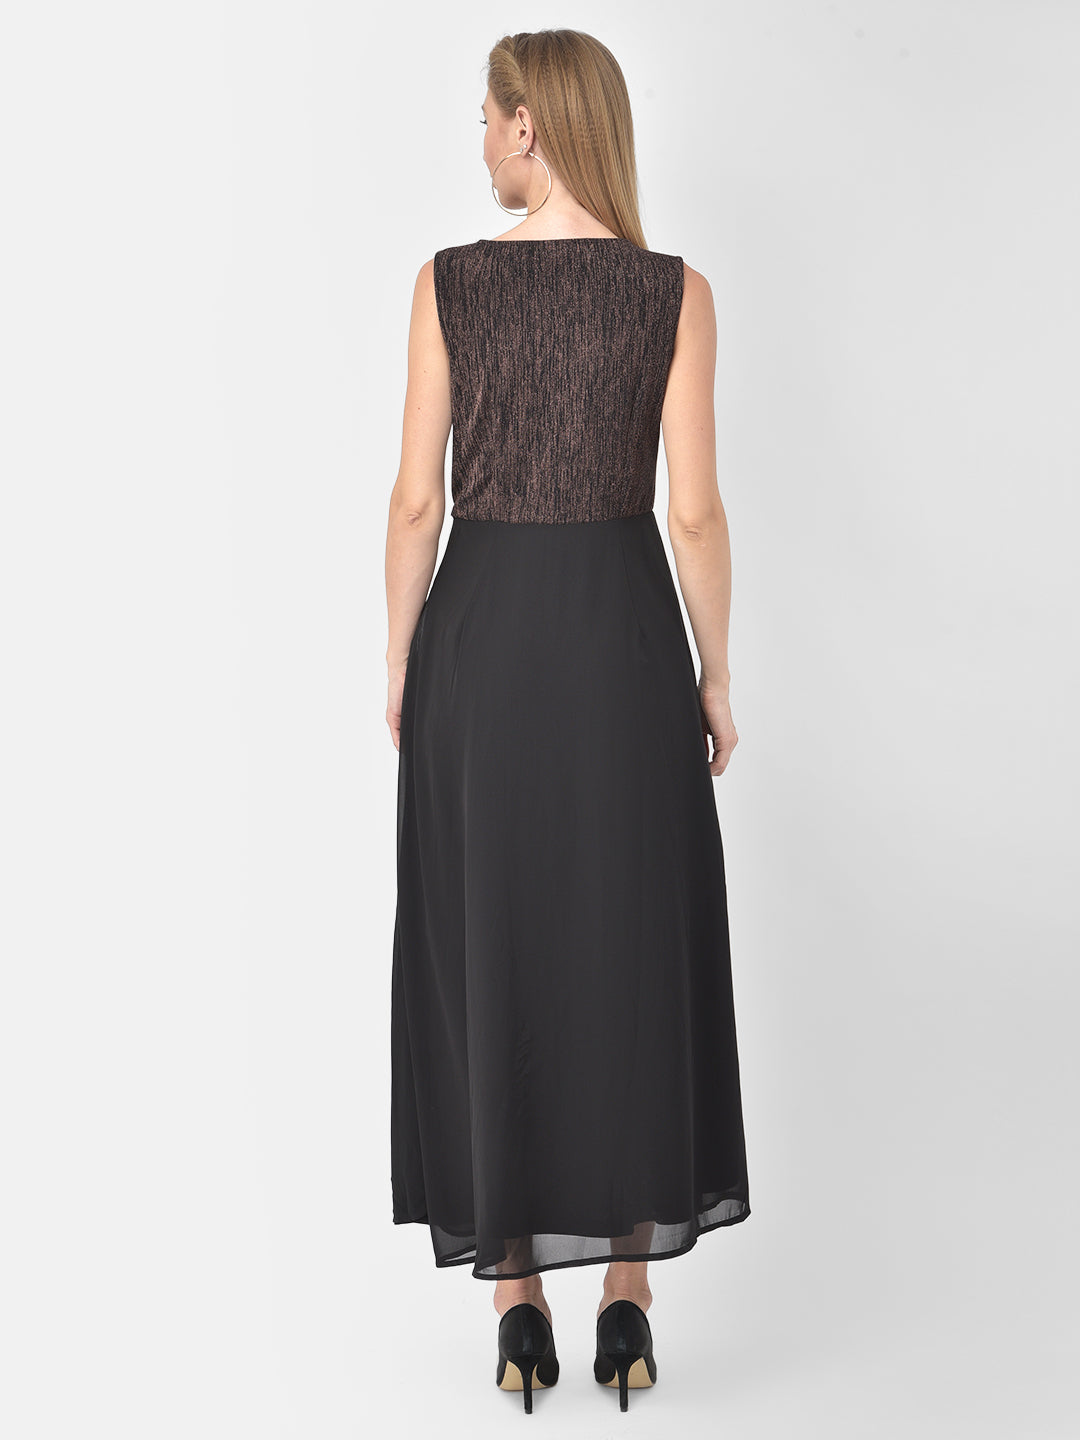 Black Pleated Sleeveless Maxi Dress